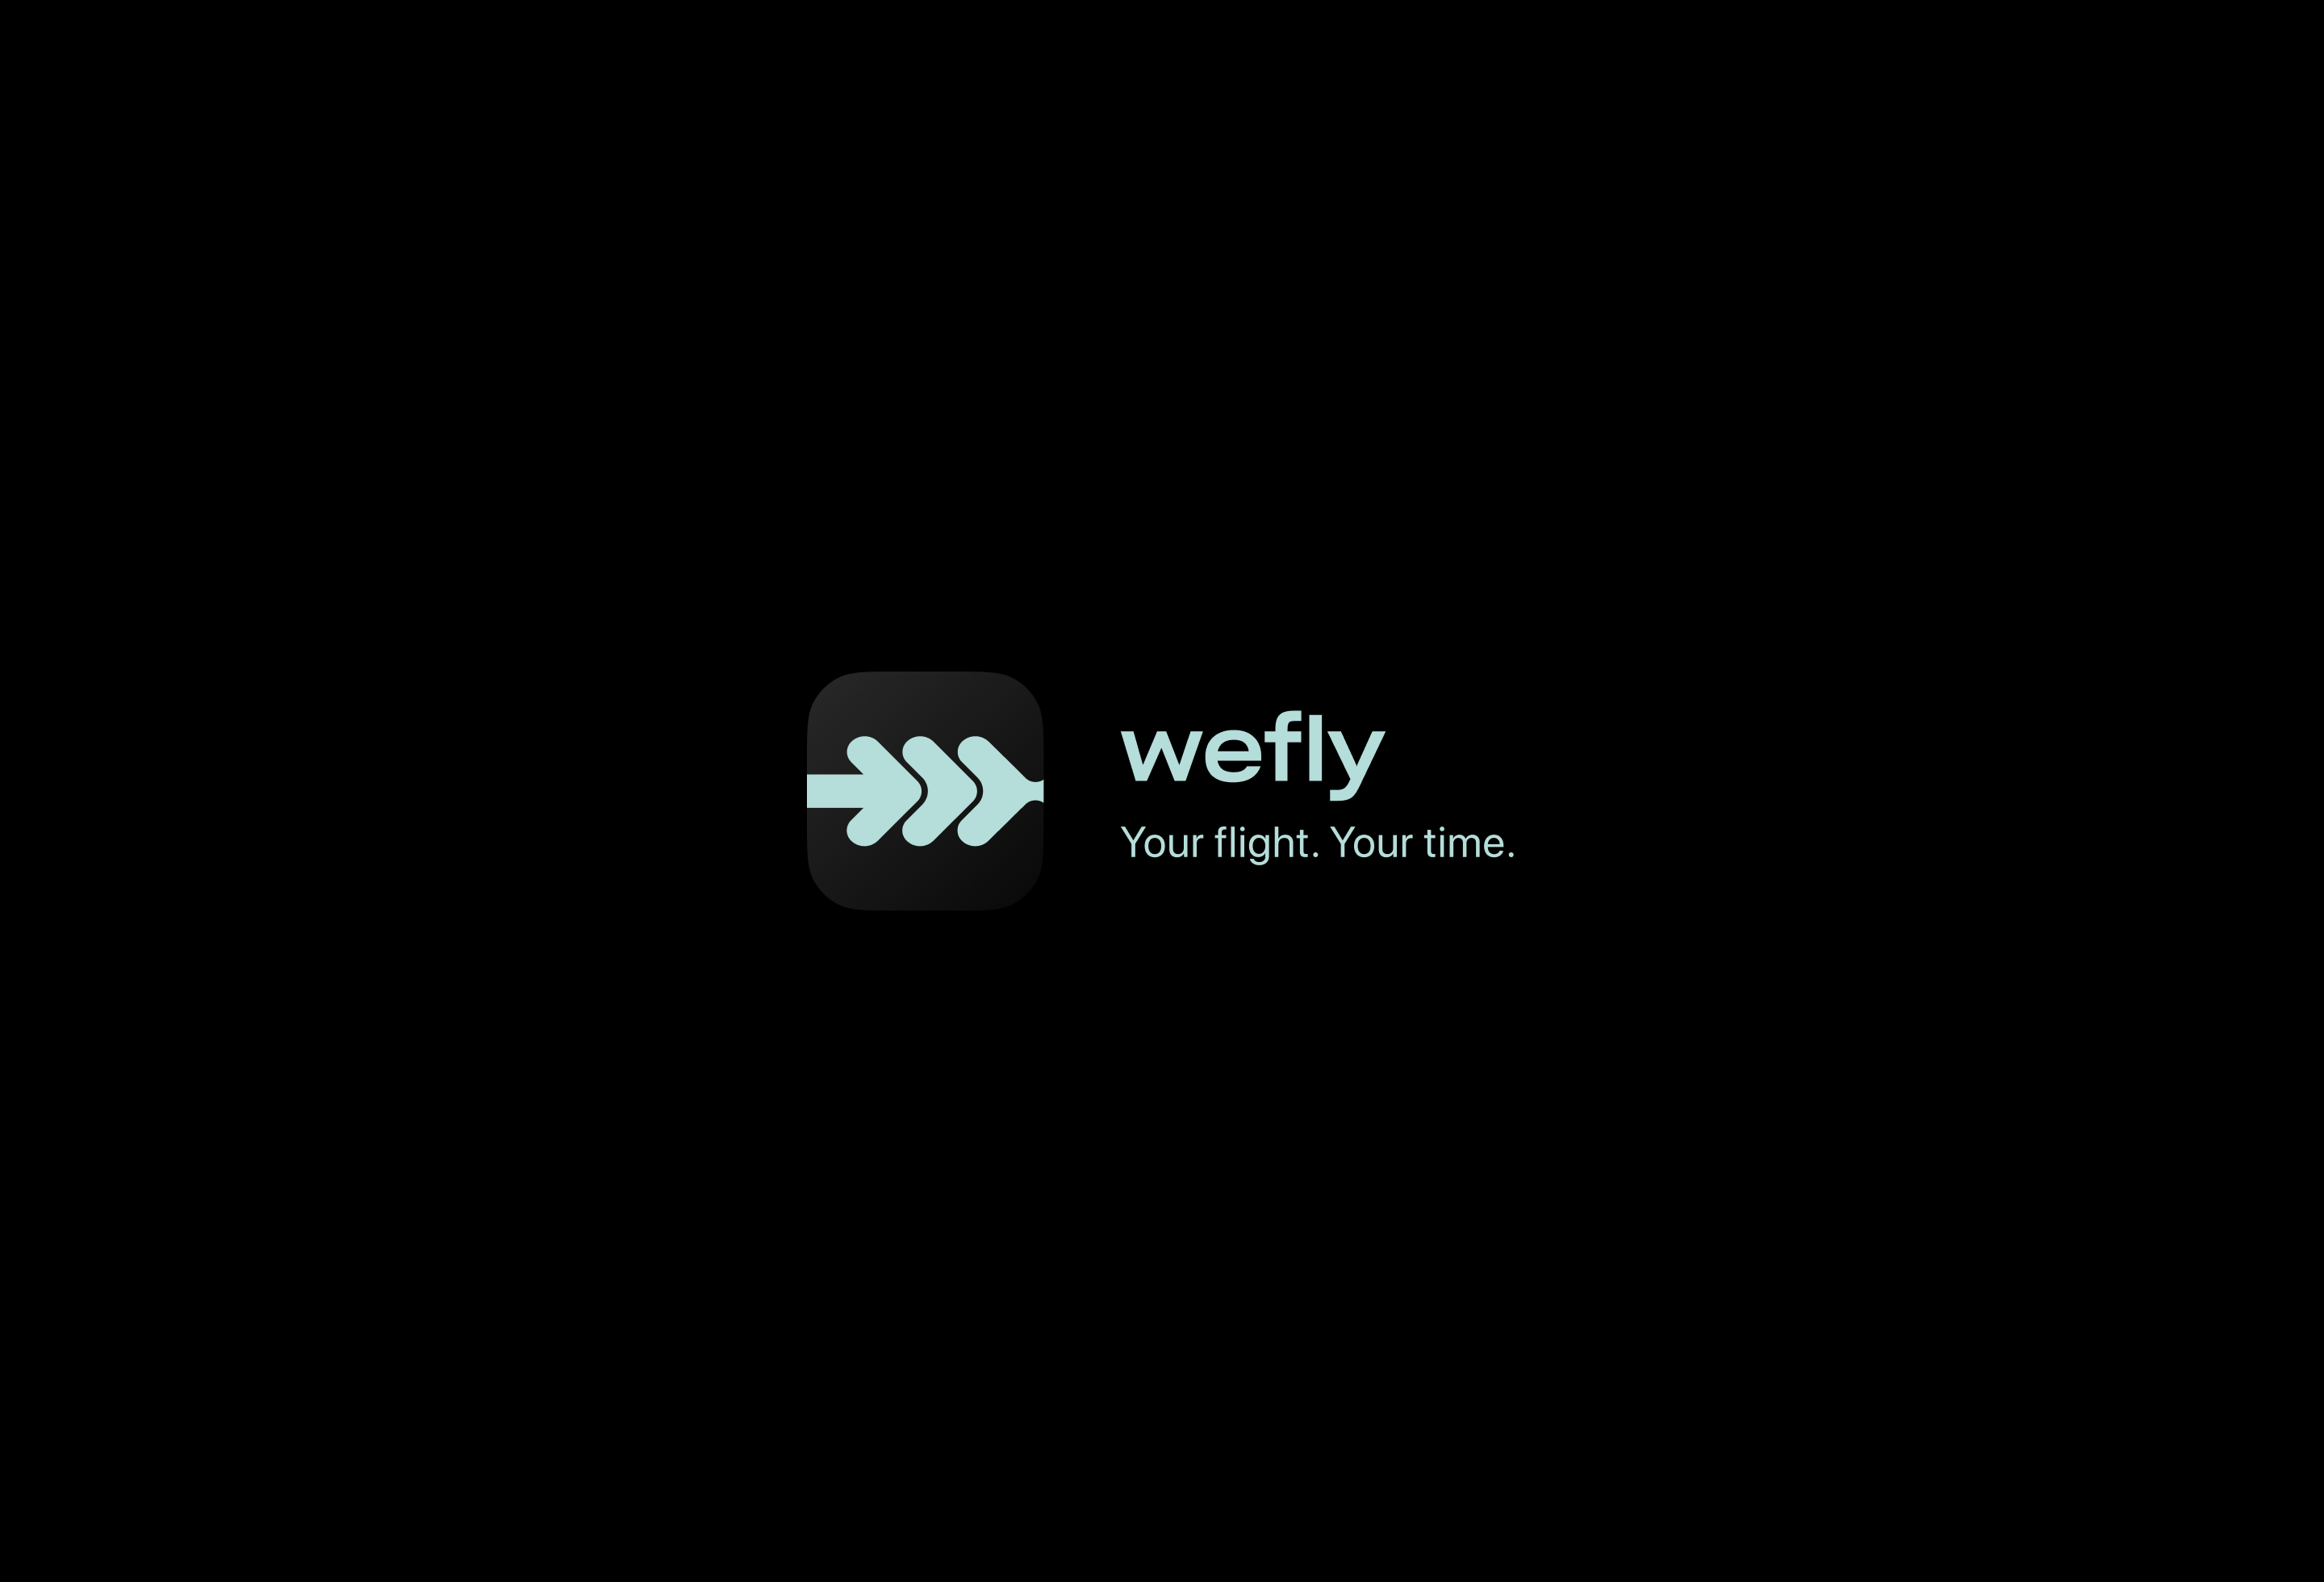 Wefly logo cover